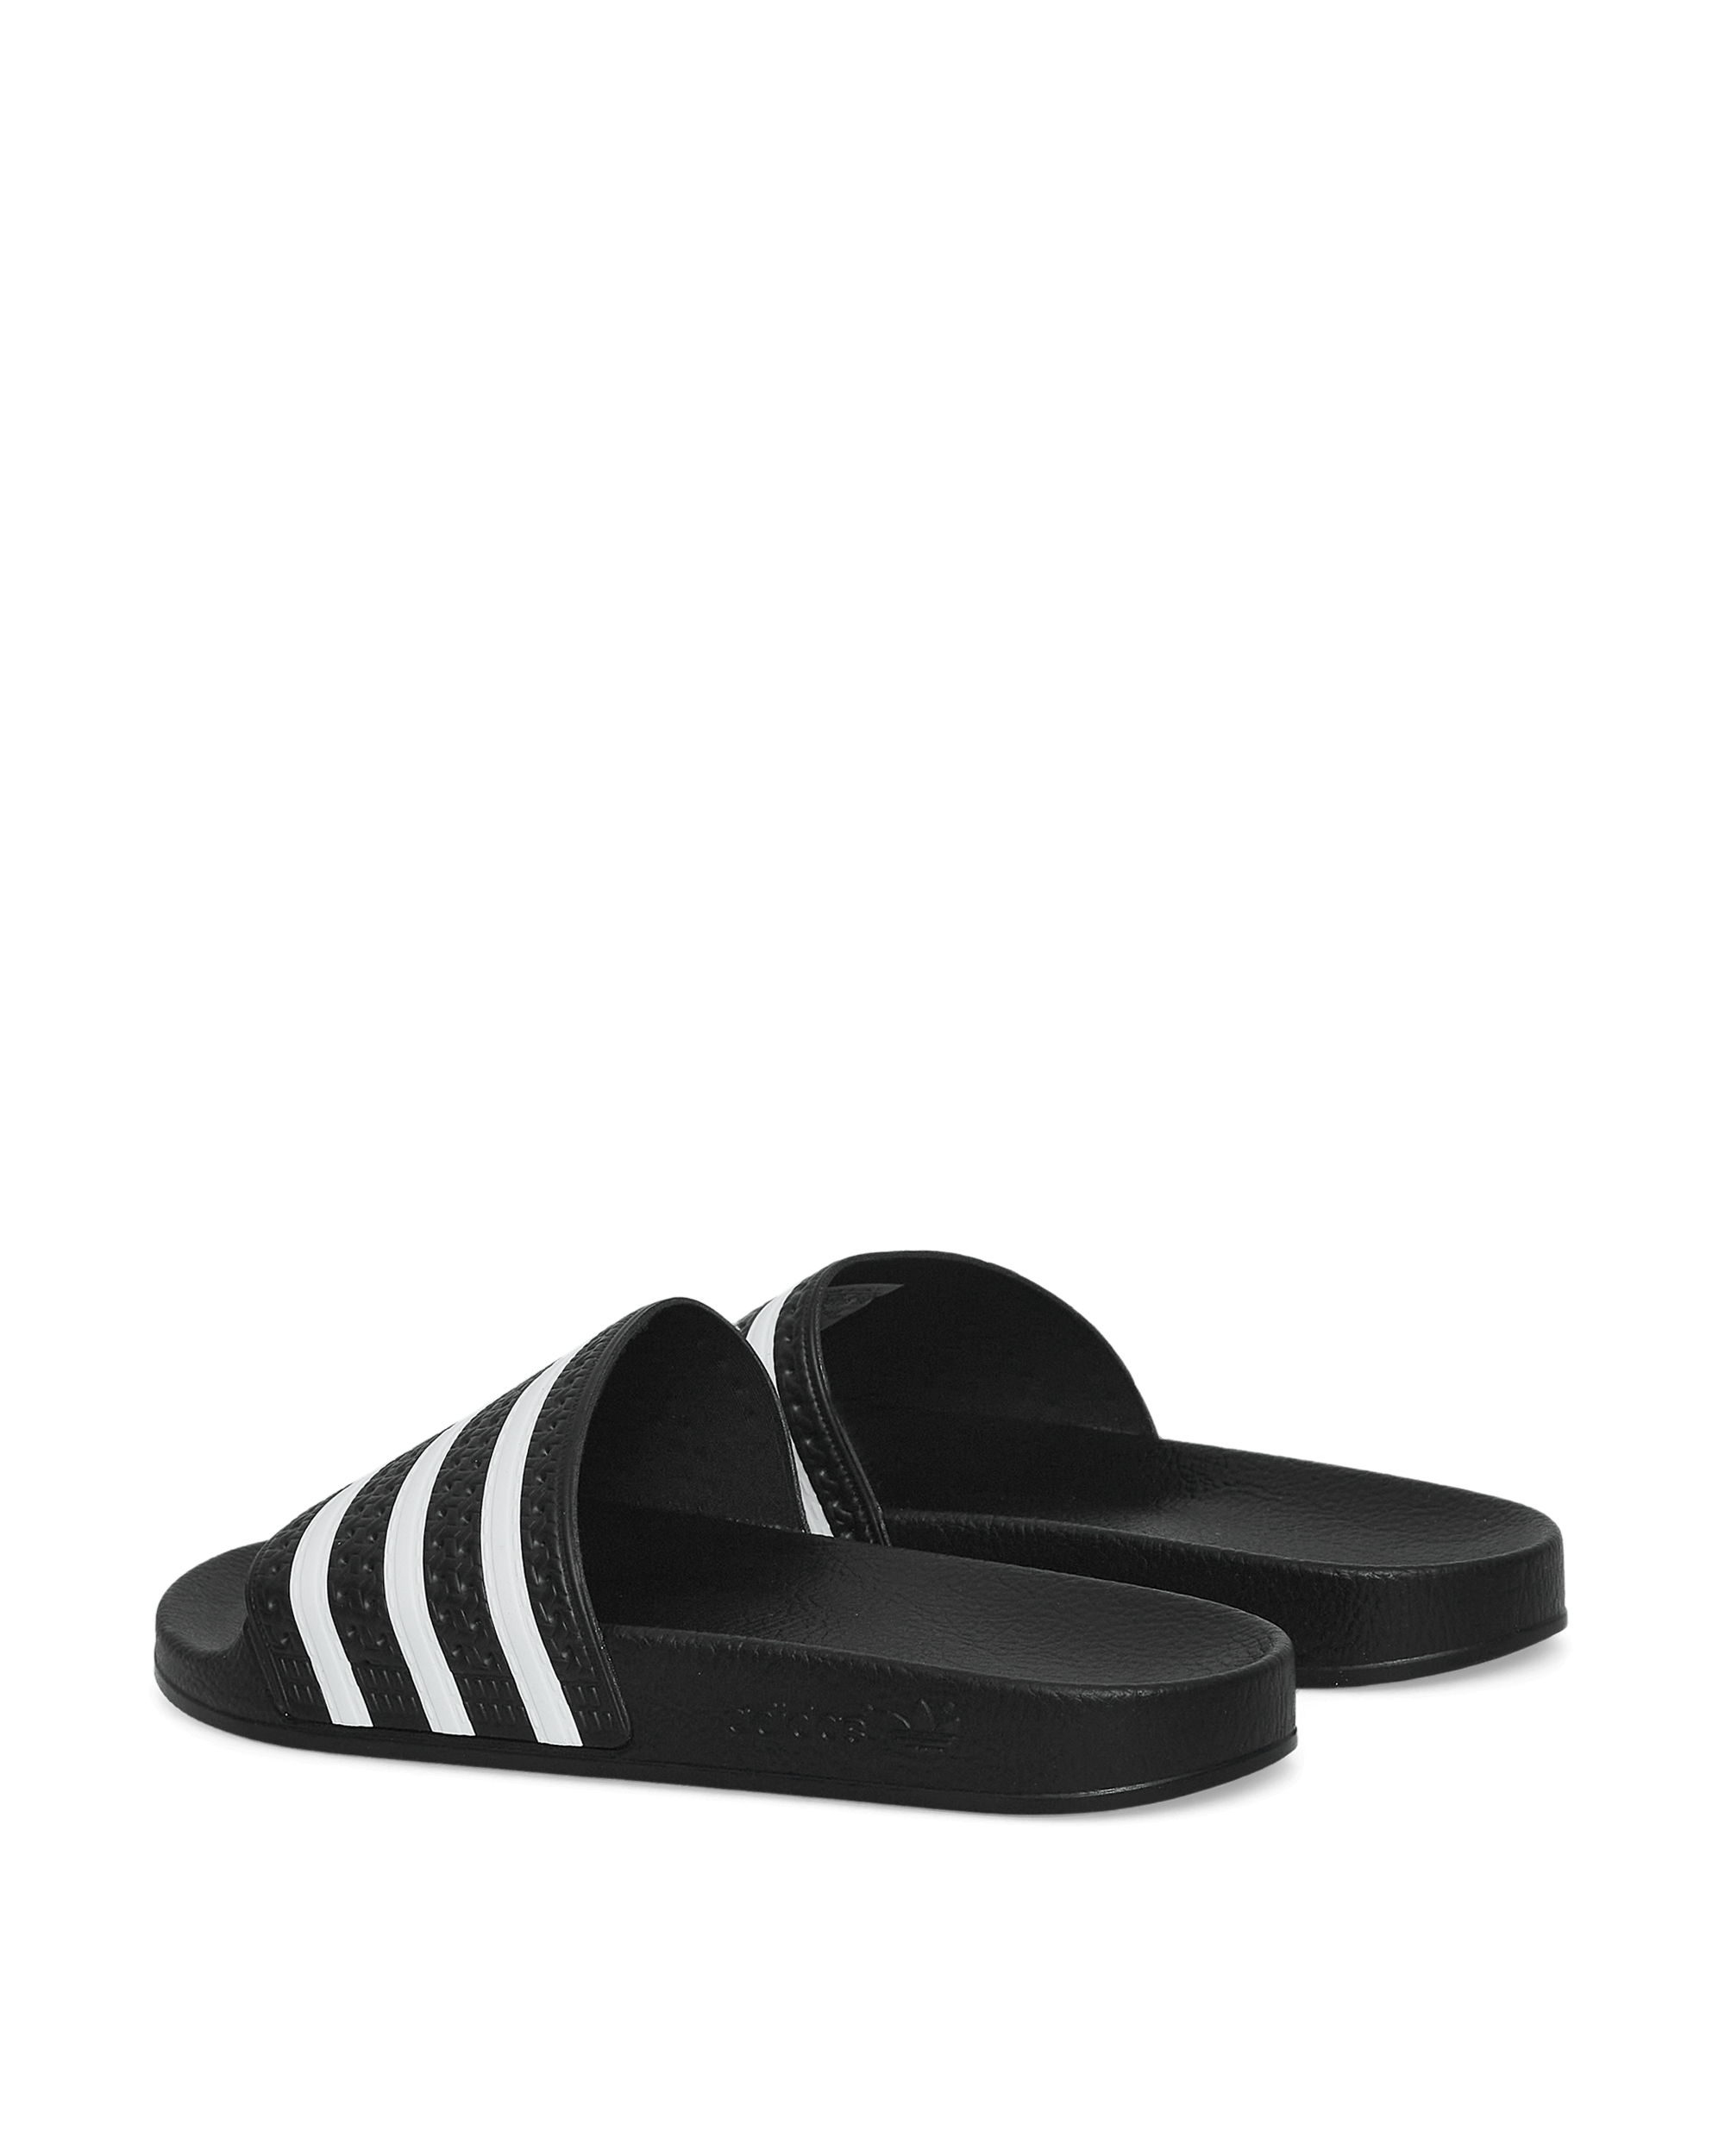 adidas Originals Adilette Cblack/White Sandals and Slides Slides 280647 001